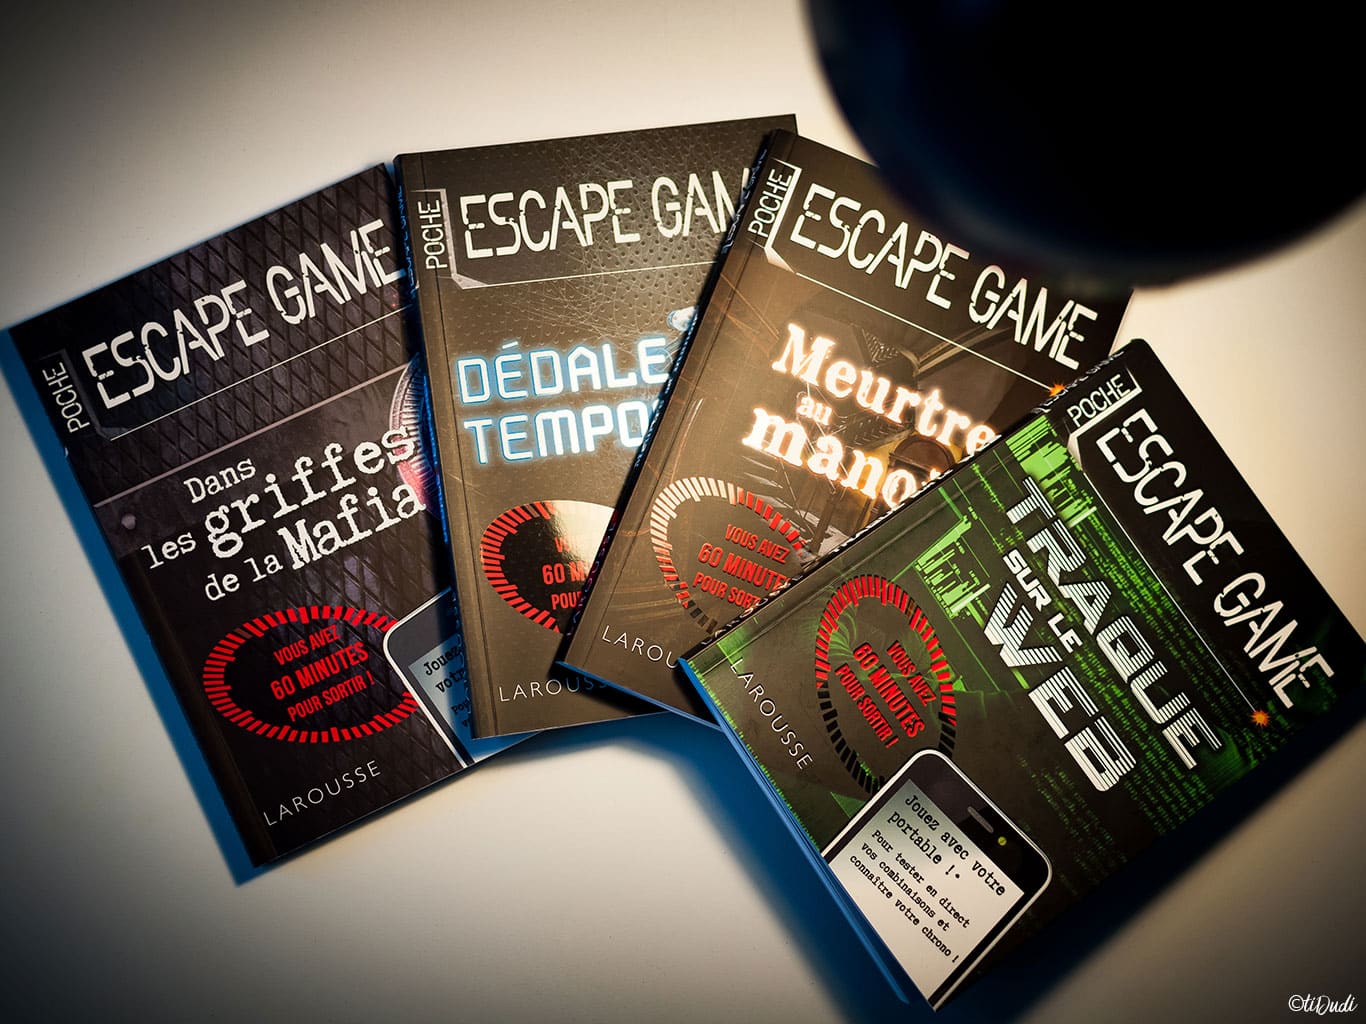 Collection Escape game de poche de Nicolas Trenti chez Larousse